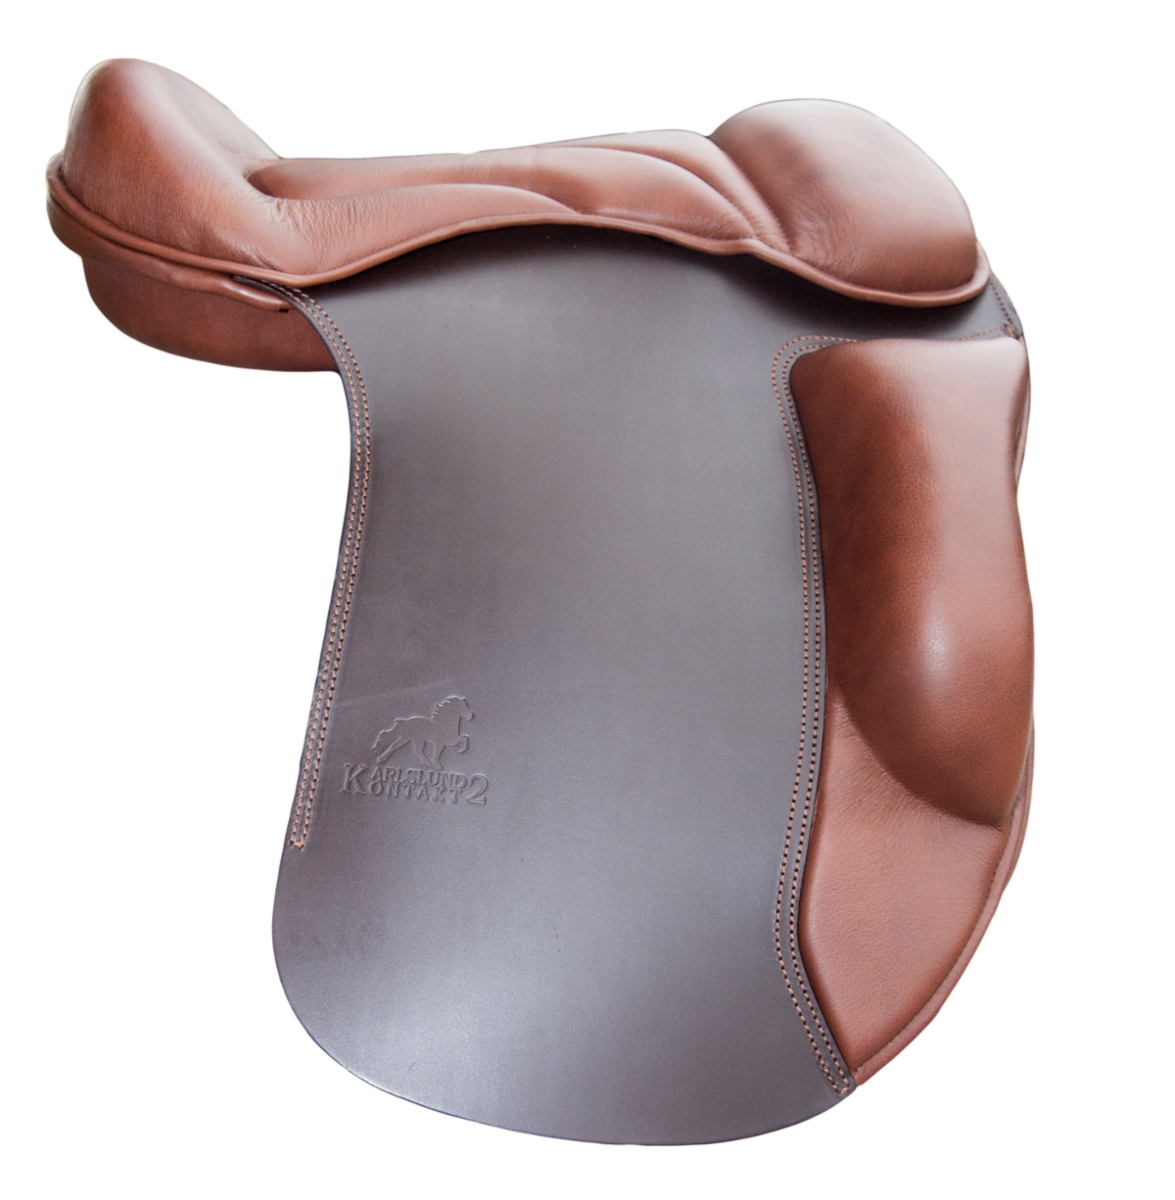 Kontakt2 saddle, brown